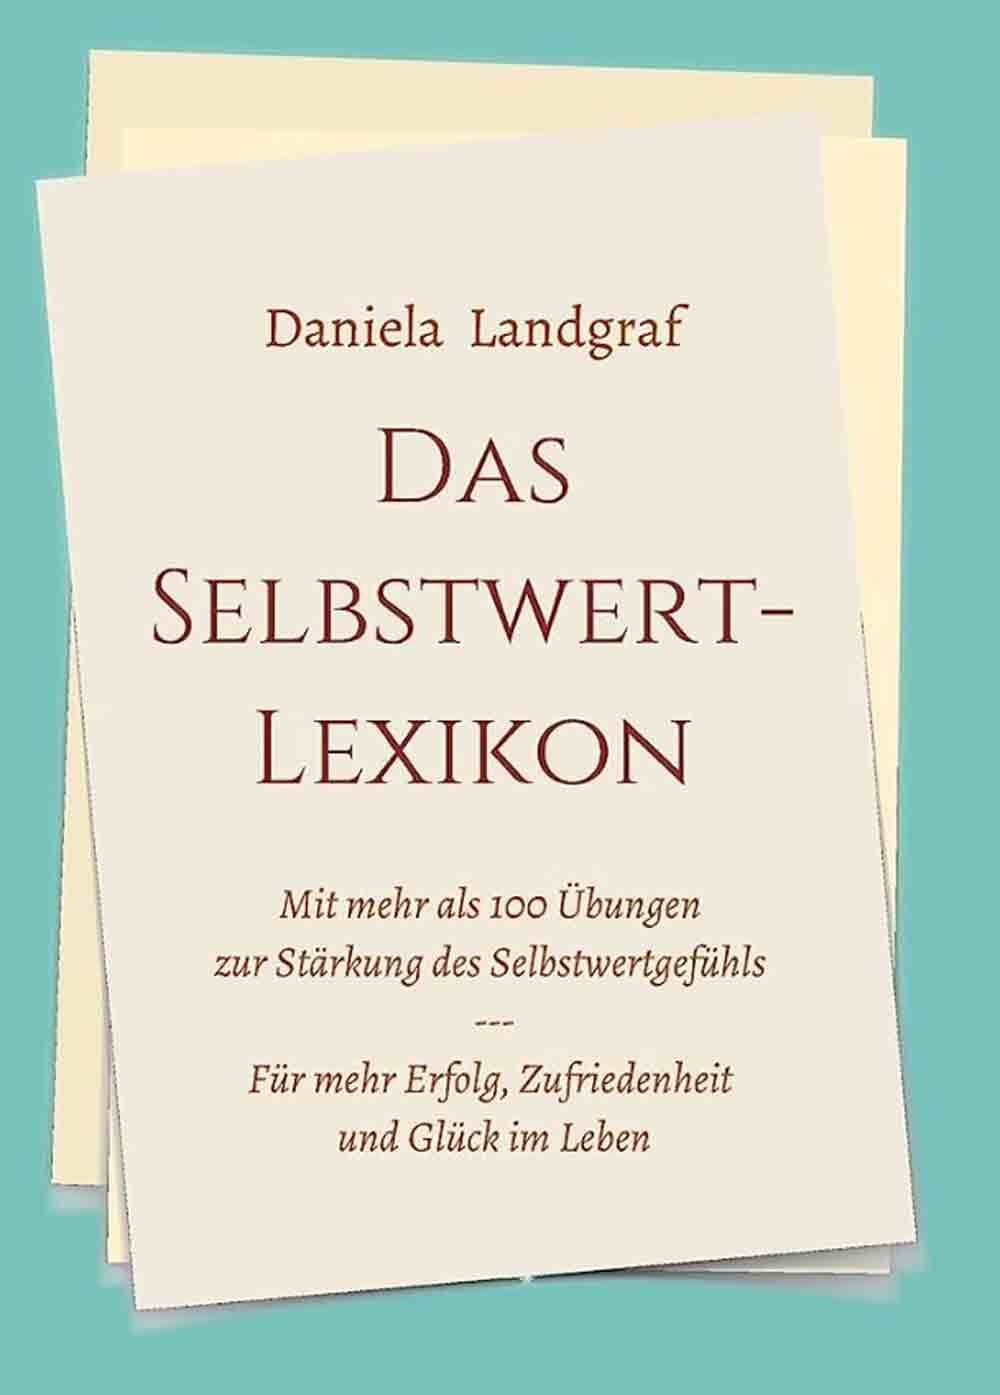 Lesetipps für Gütersloh, Daniela Landgraf, »Das Selbstwert Lexikon«